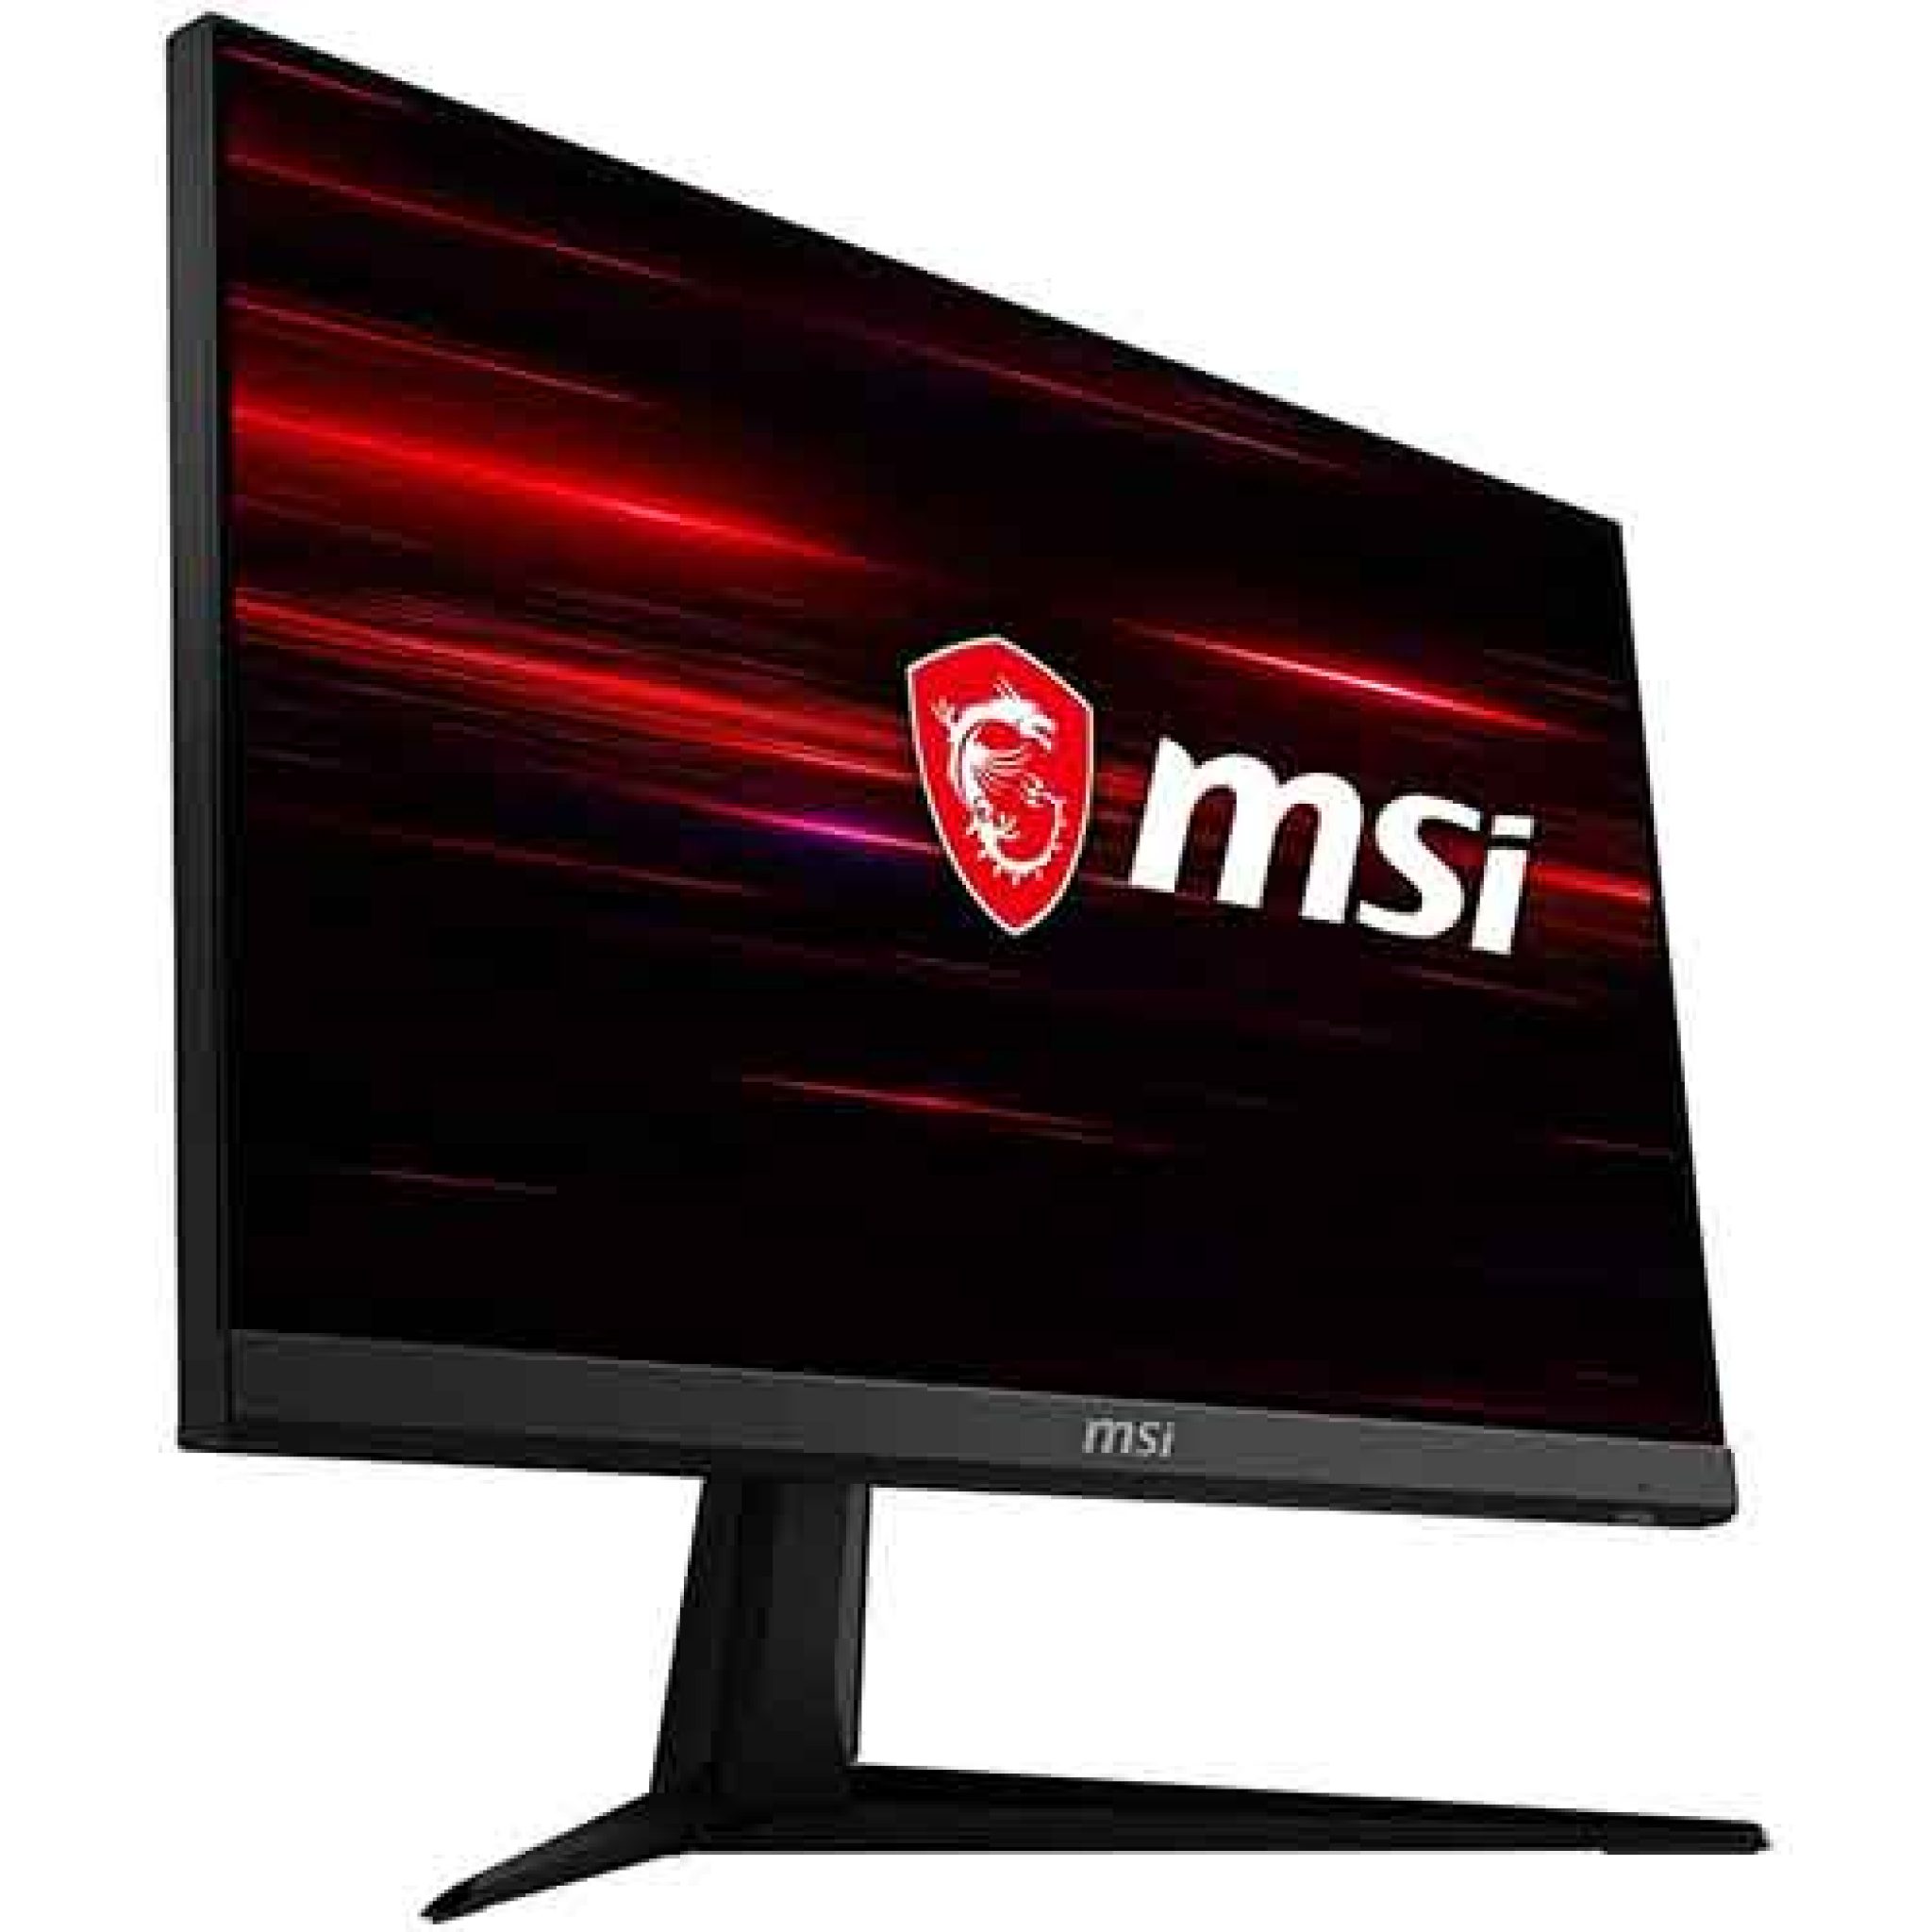 MSI Optix G241 24 Gaming Monitor FHD 144Hz IPS 1ms AMD FreeSync Price